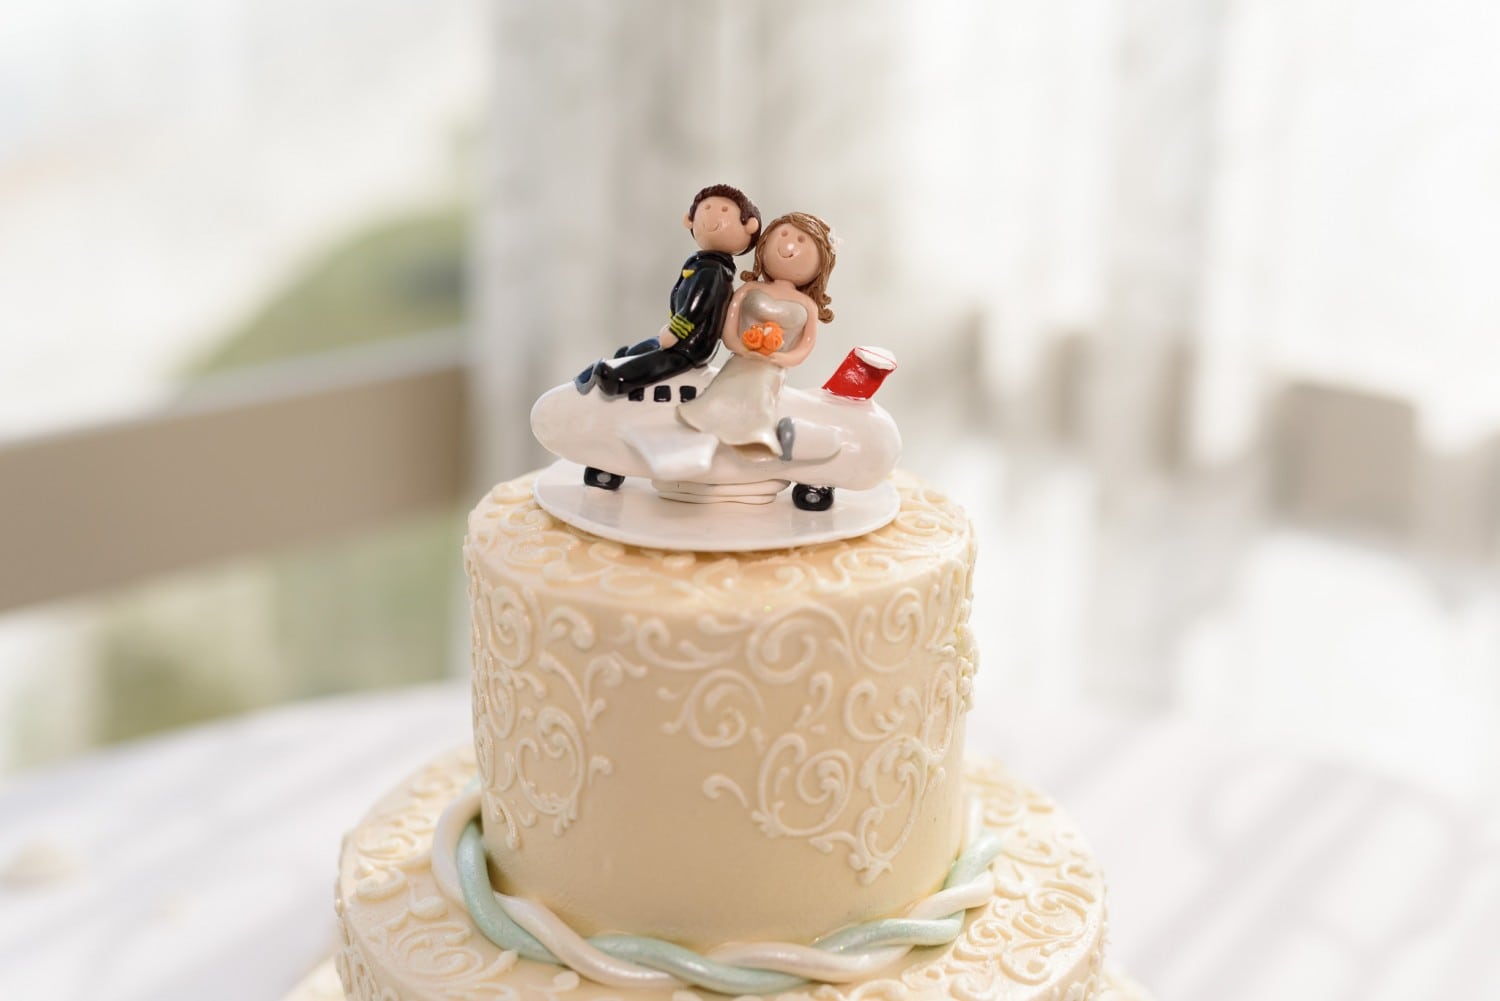 Airline pilot wedding cake topper  - Hilton at Kingston Plantation